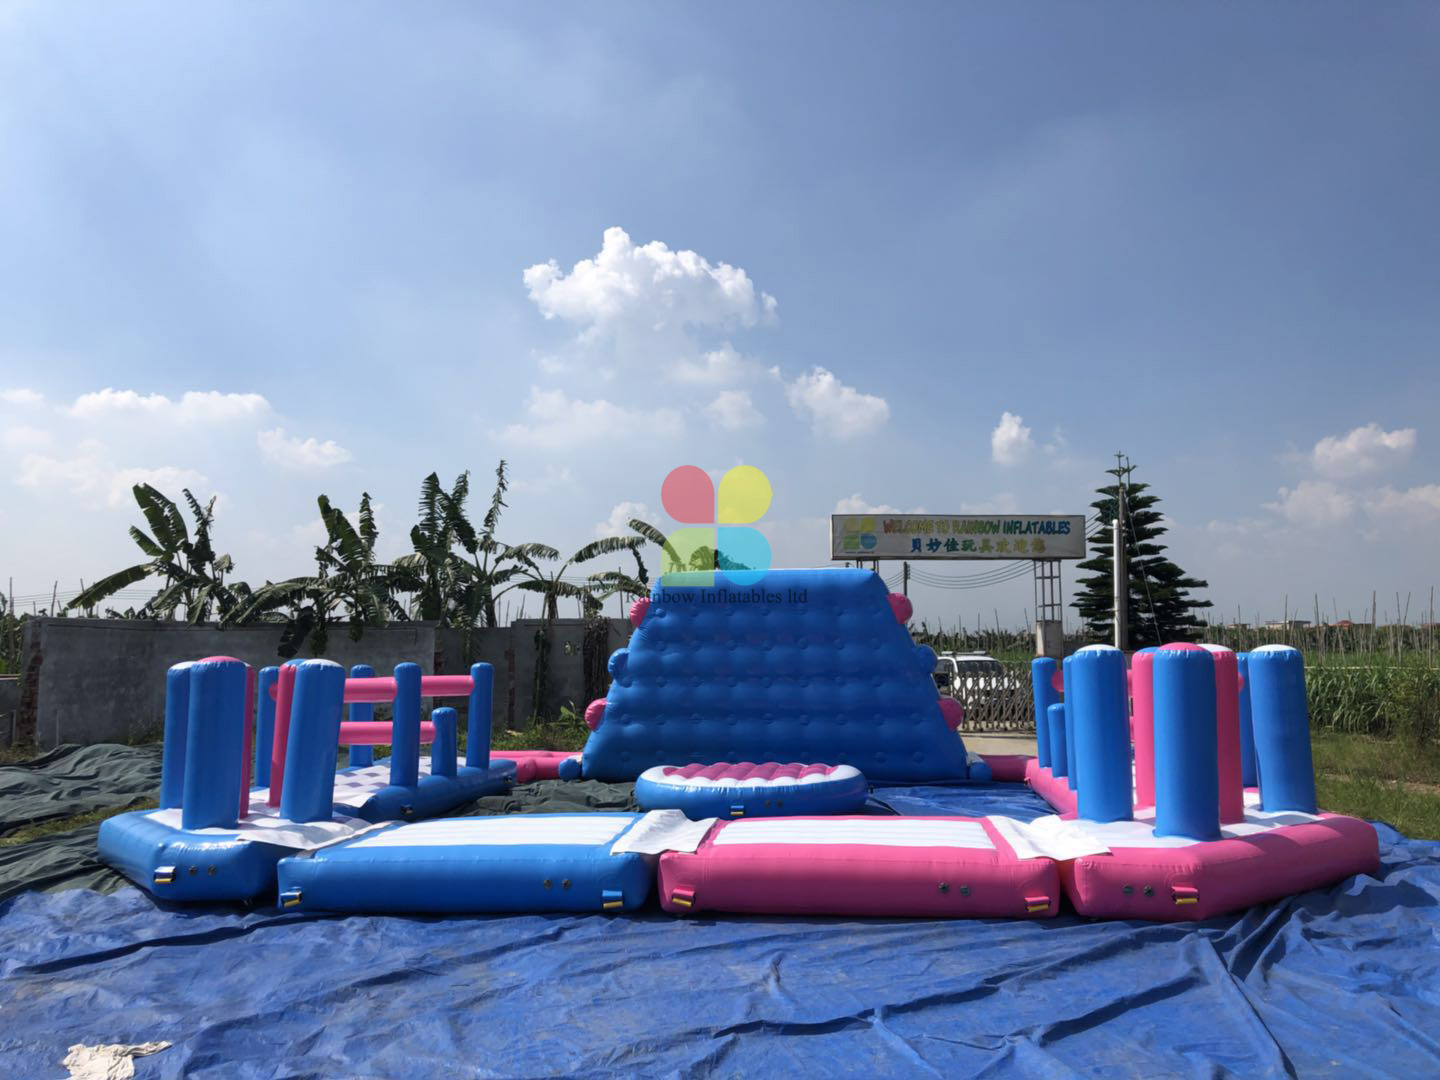 Lake Inflatables Water Games Used Fiberglass Water Slide for Sale Used Water Slides for Sale